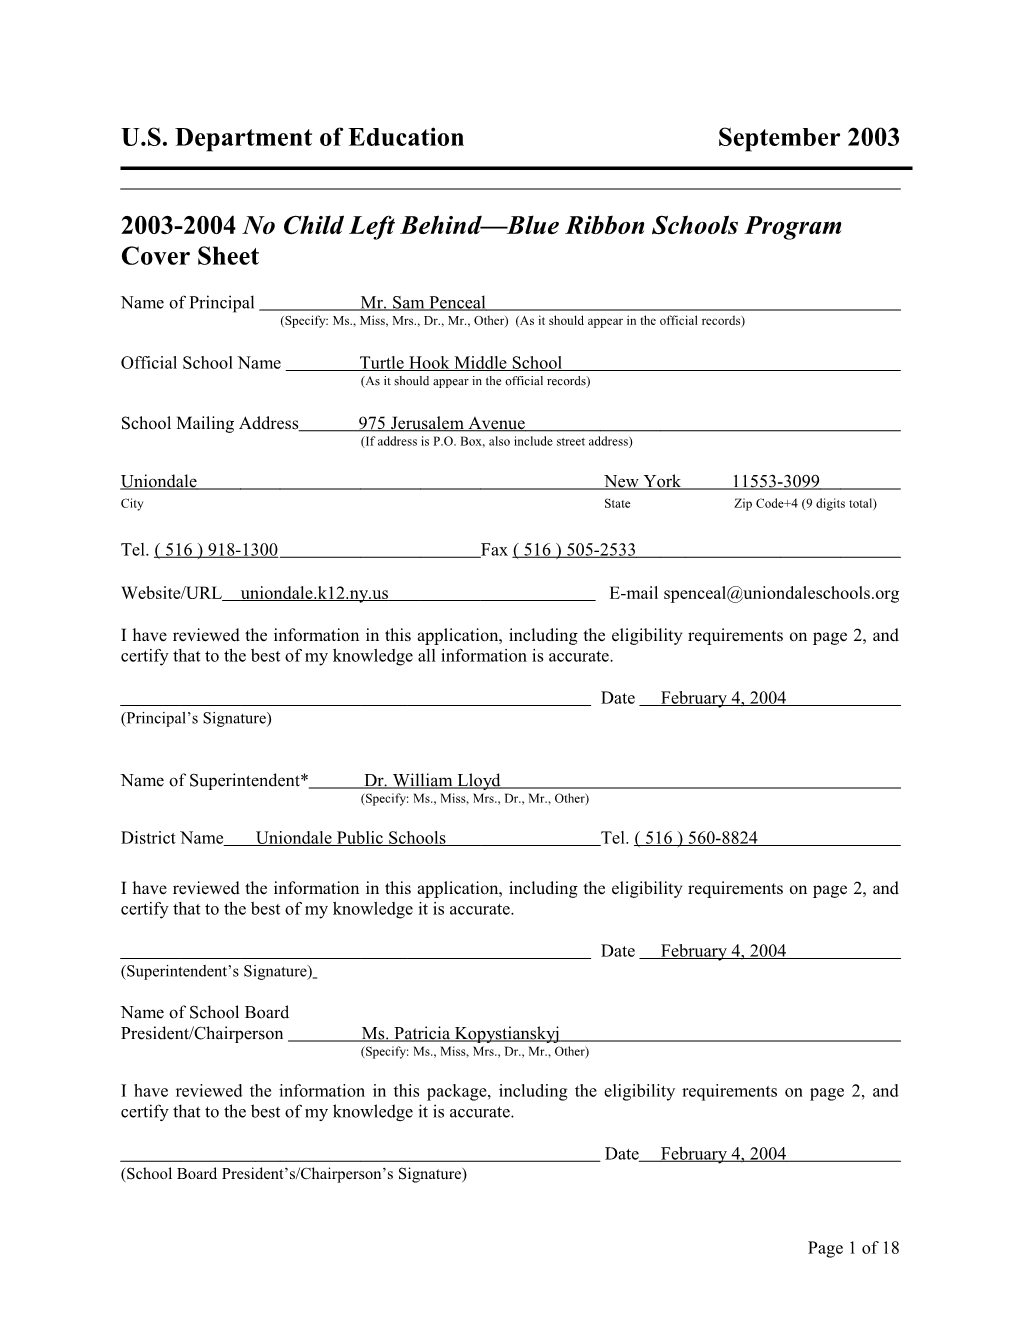 Turtle Hook Middle School 2004 No Child Left Behind-Blue Ribbon School Application (Msword)